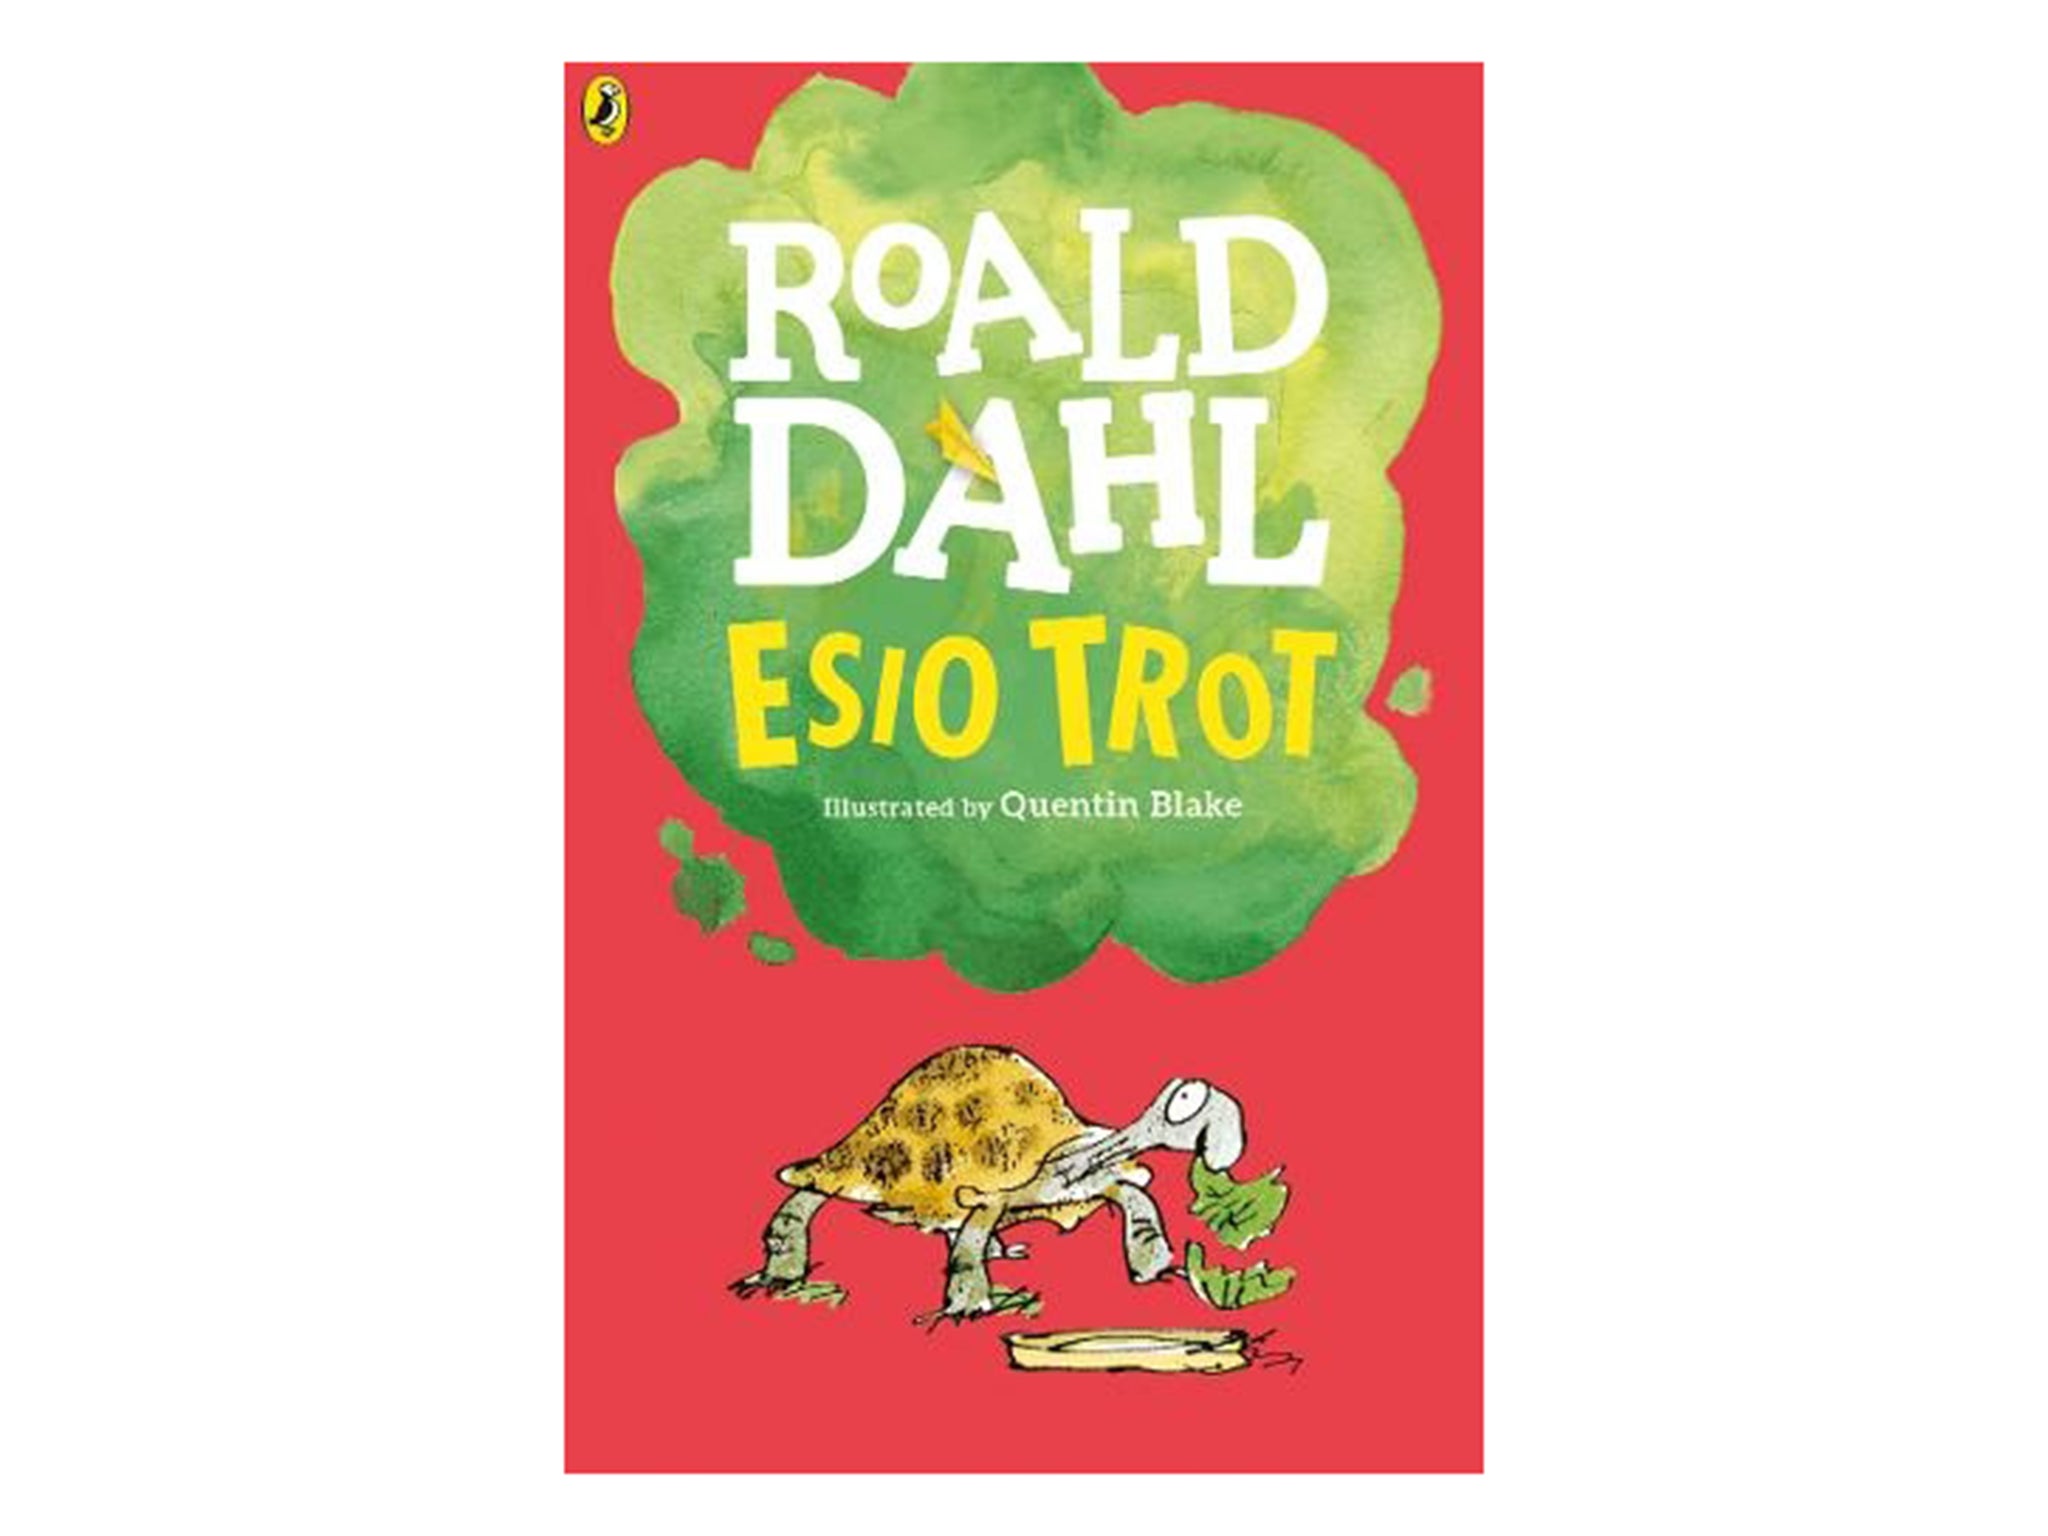 ‘Esio Trot’ by Roald Dahl day indybest.jpg